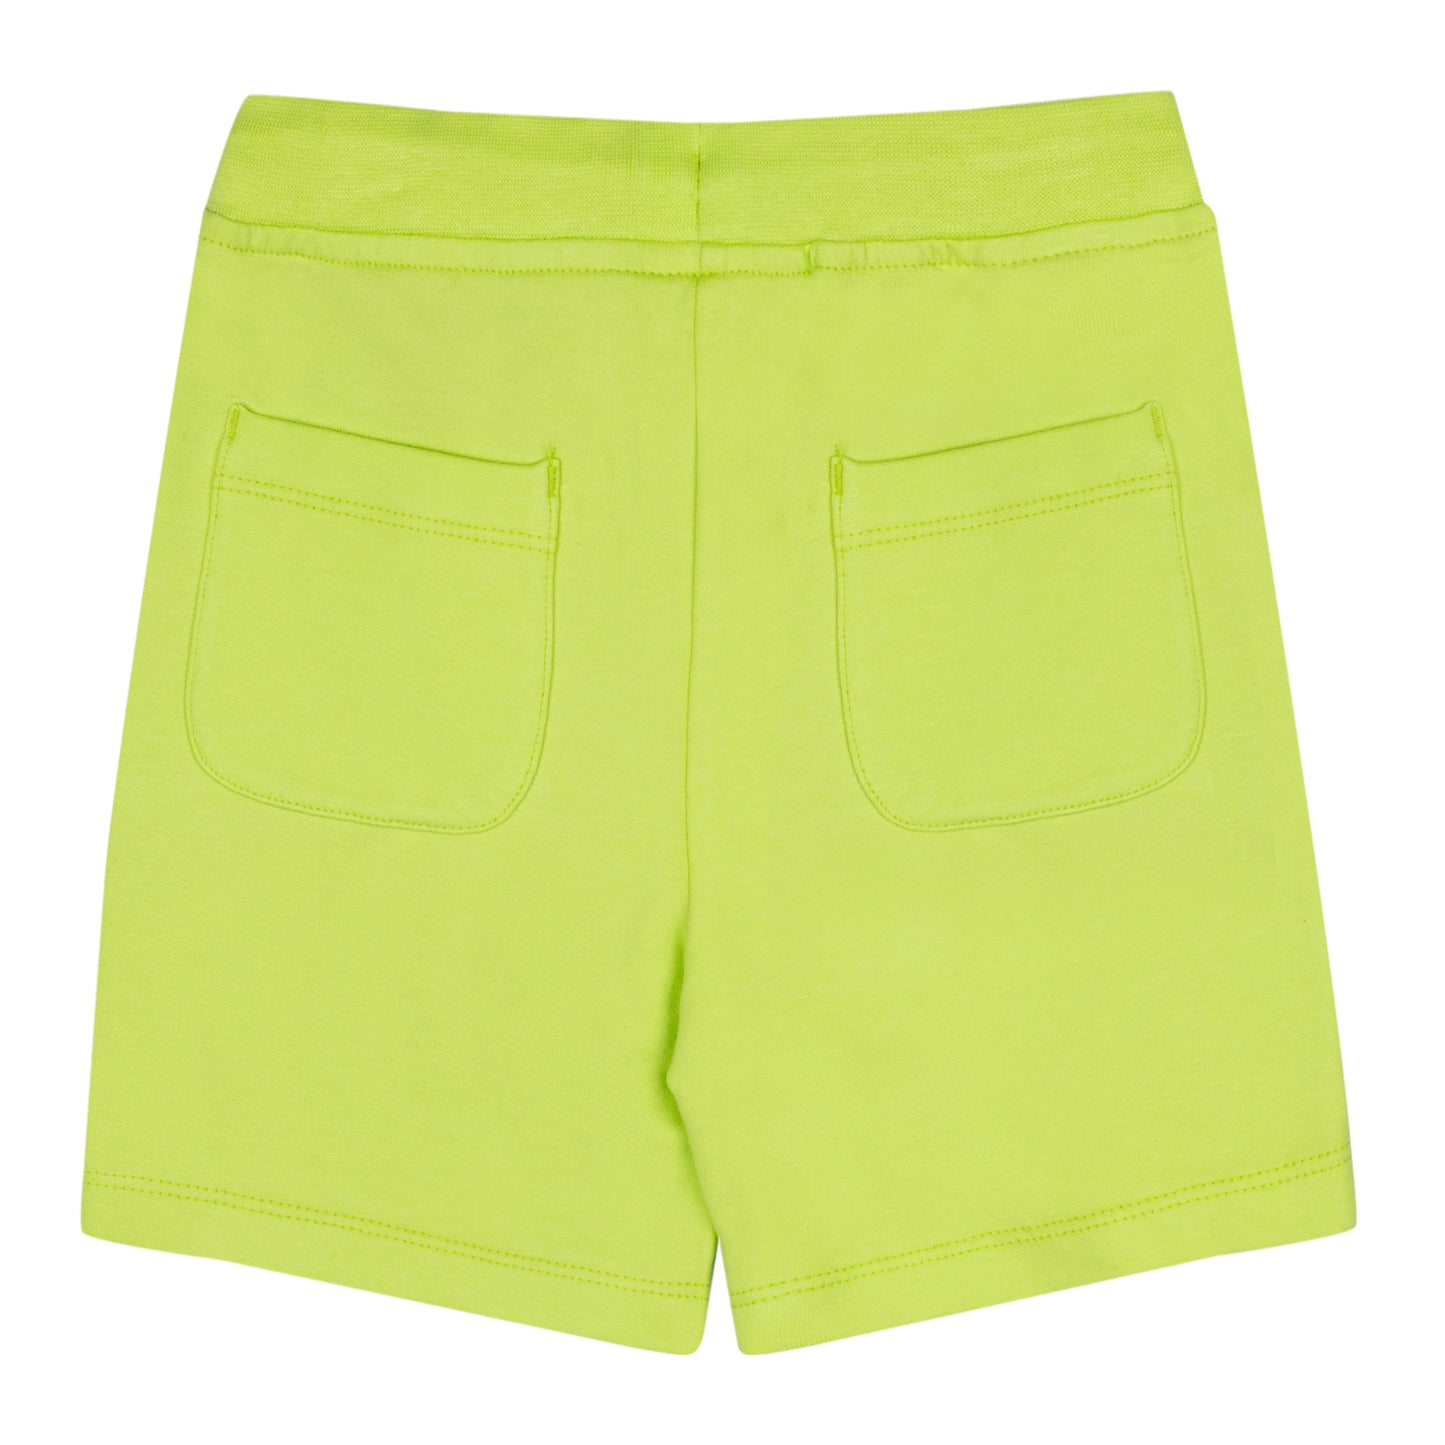 Shorts + Hoody Set Lime Sherbet | Walter